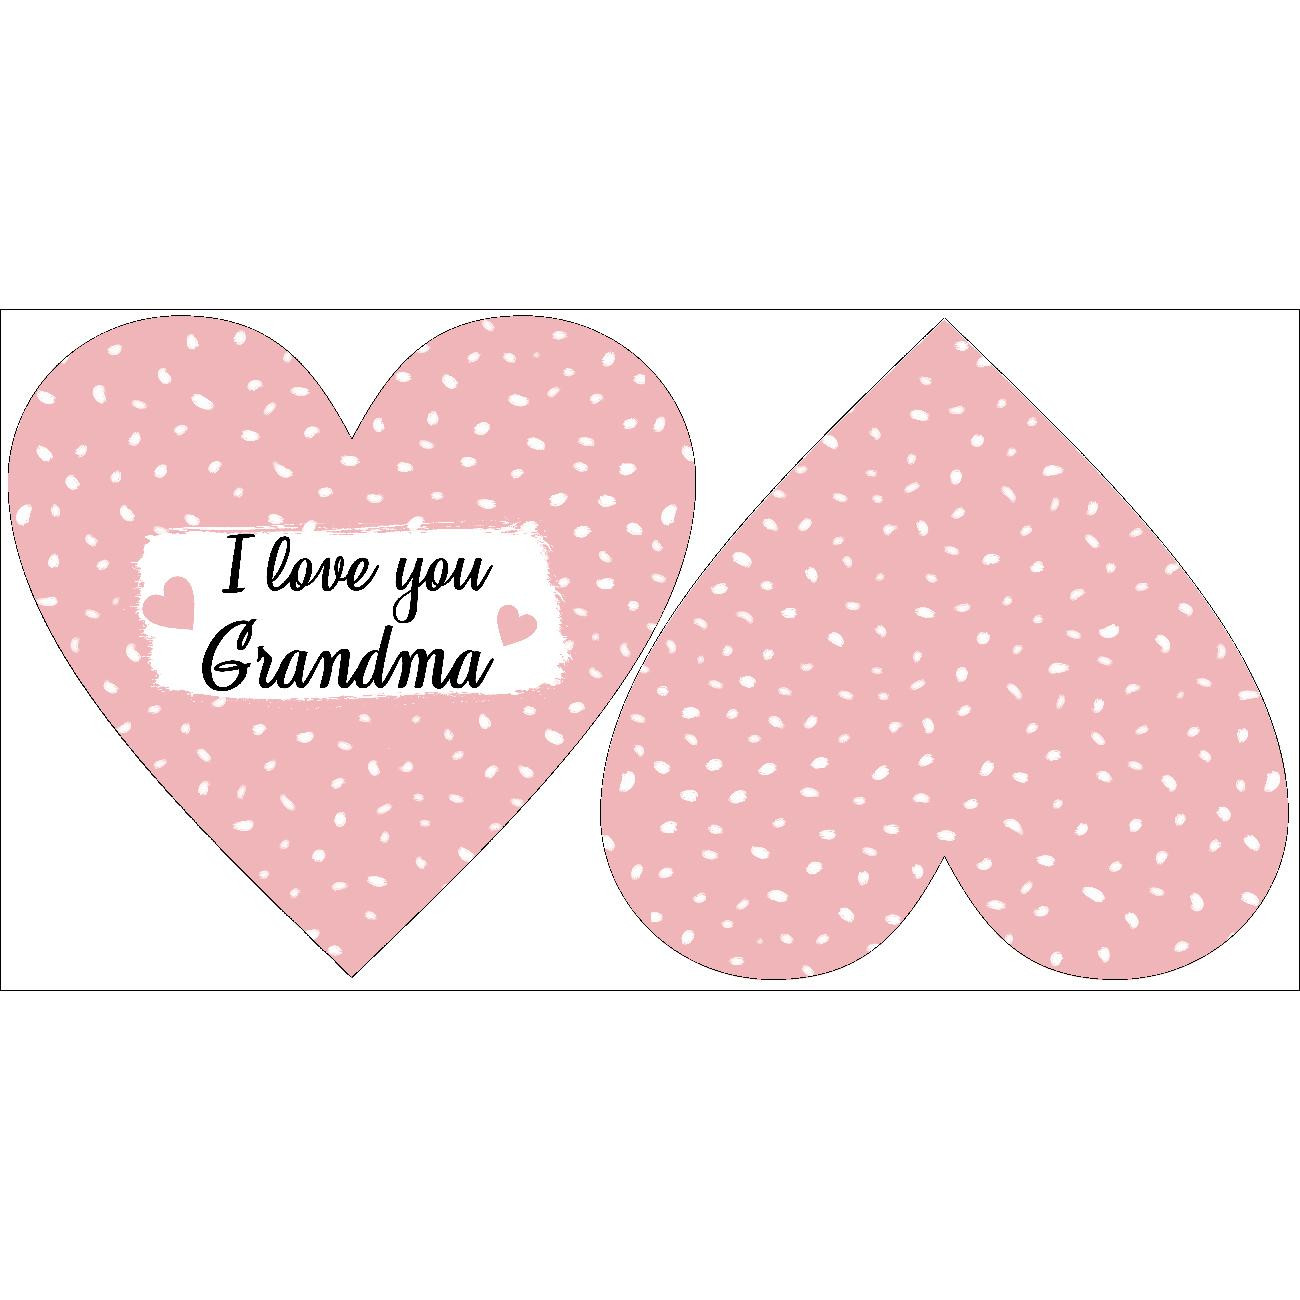 DECORATIVE PILLOW HEART - I love you Grandma / pink